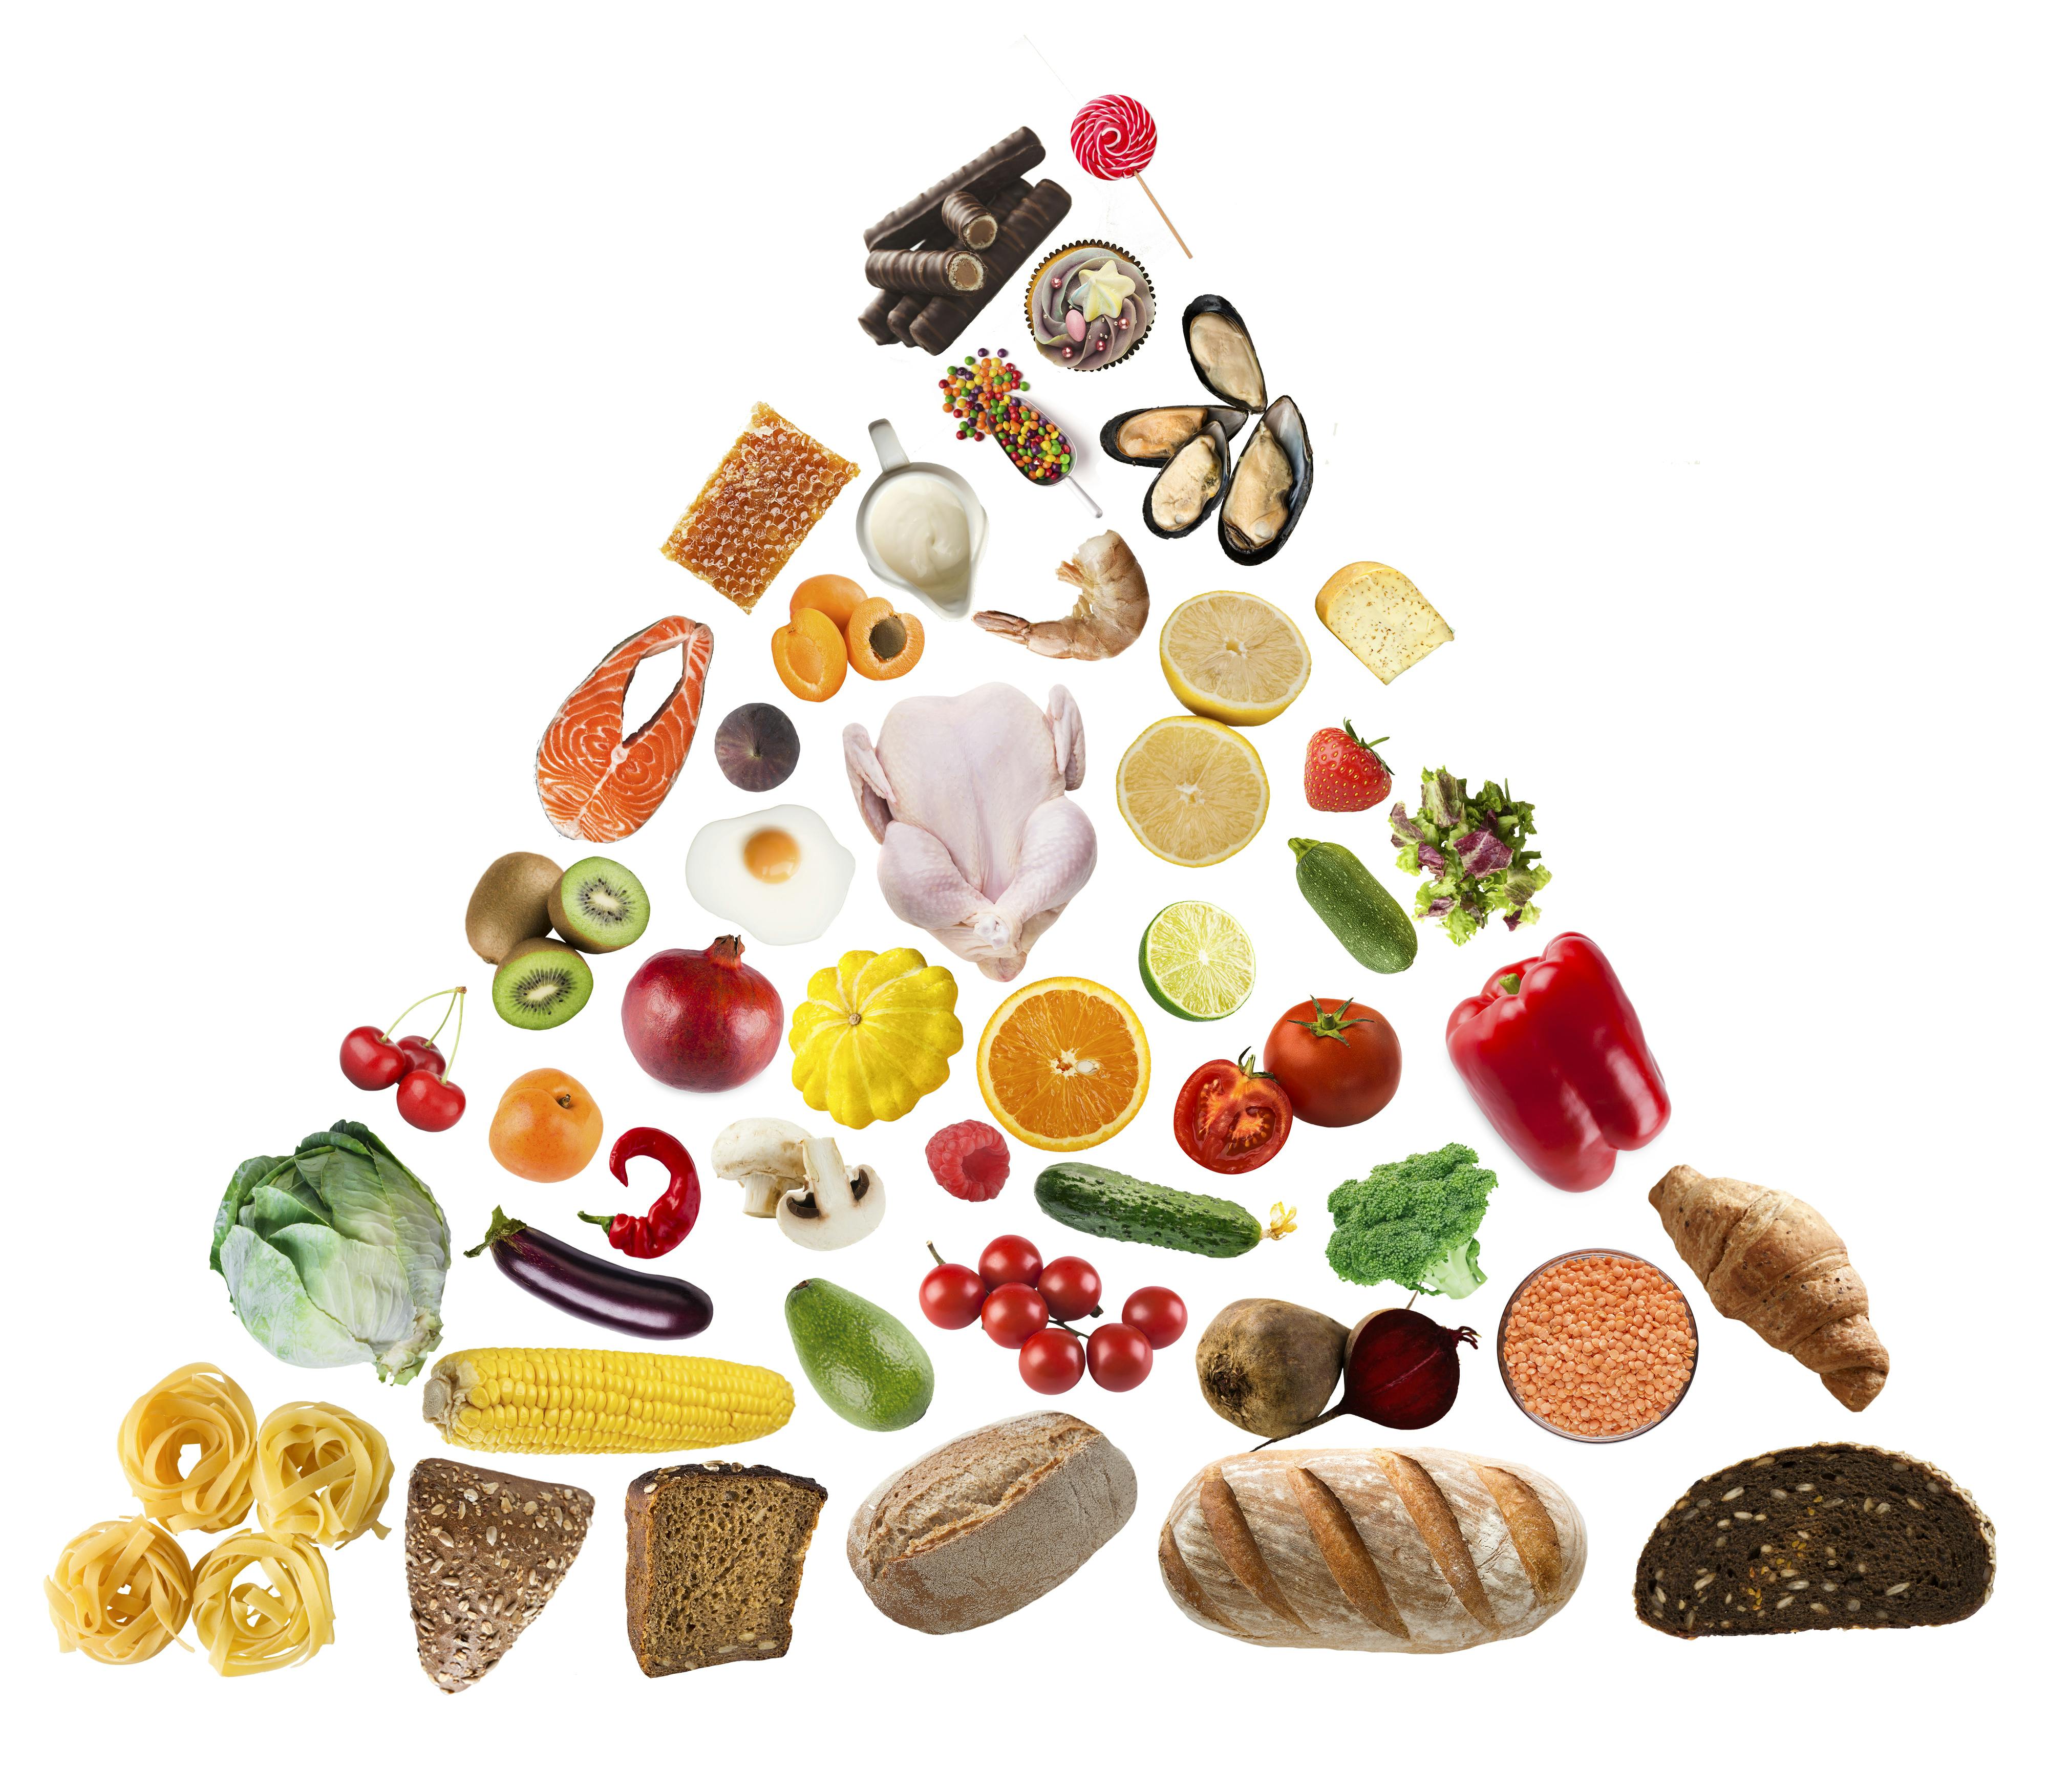 Representation of the food pyramid